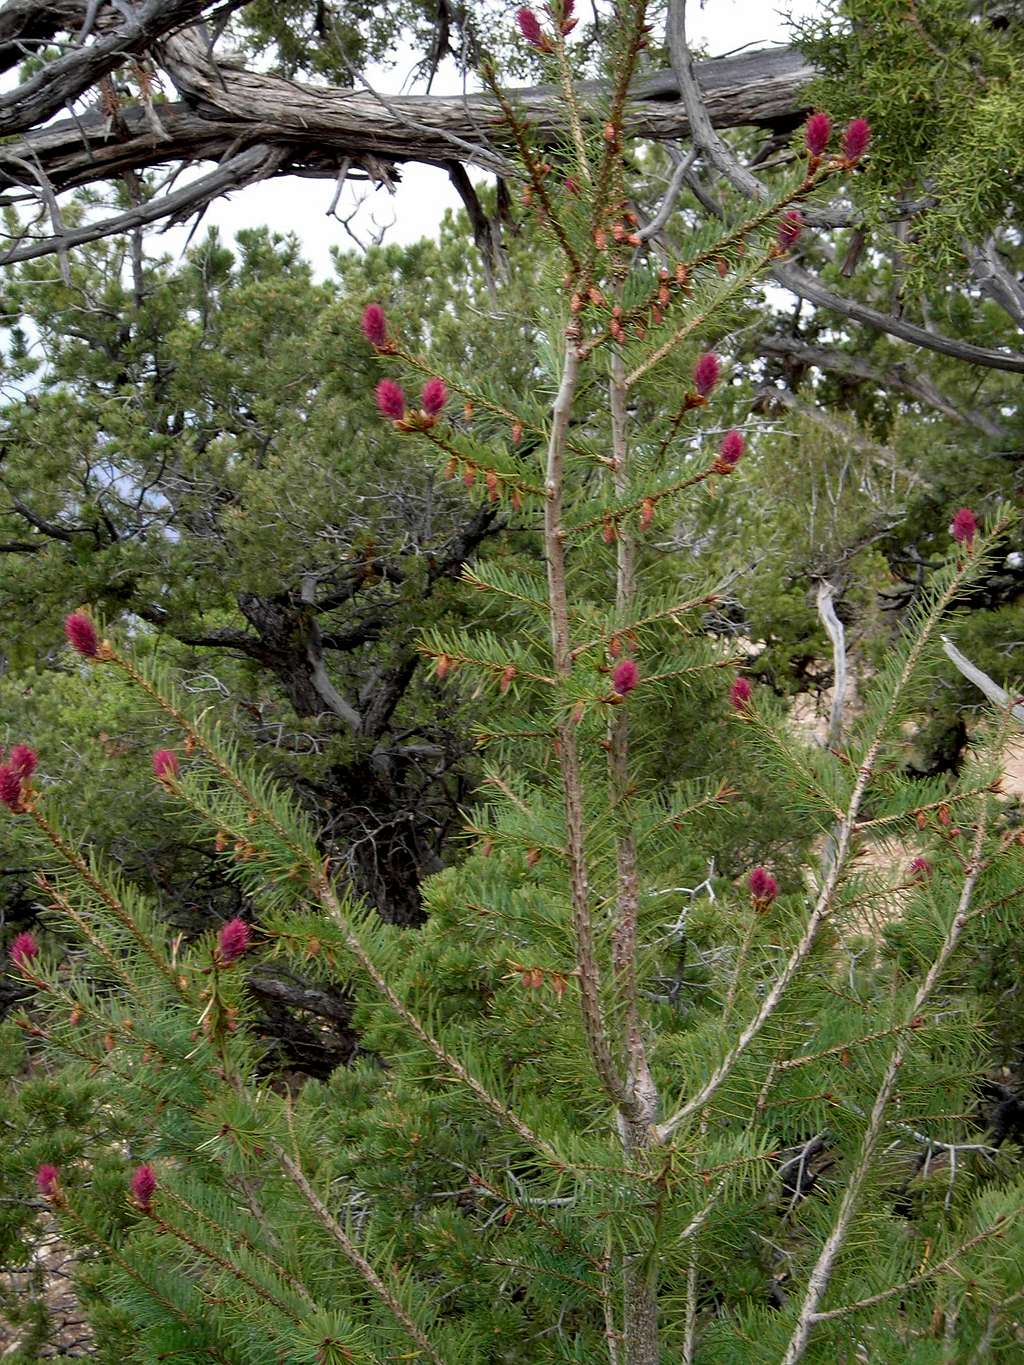 Blooming Pine(or Fir?)